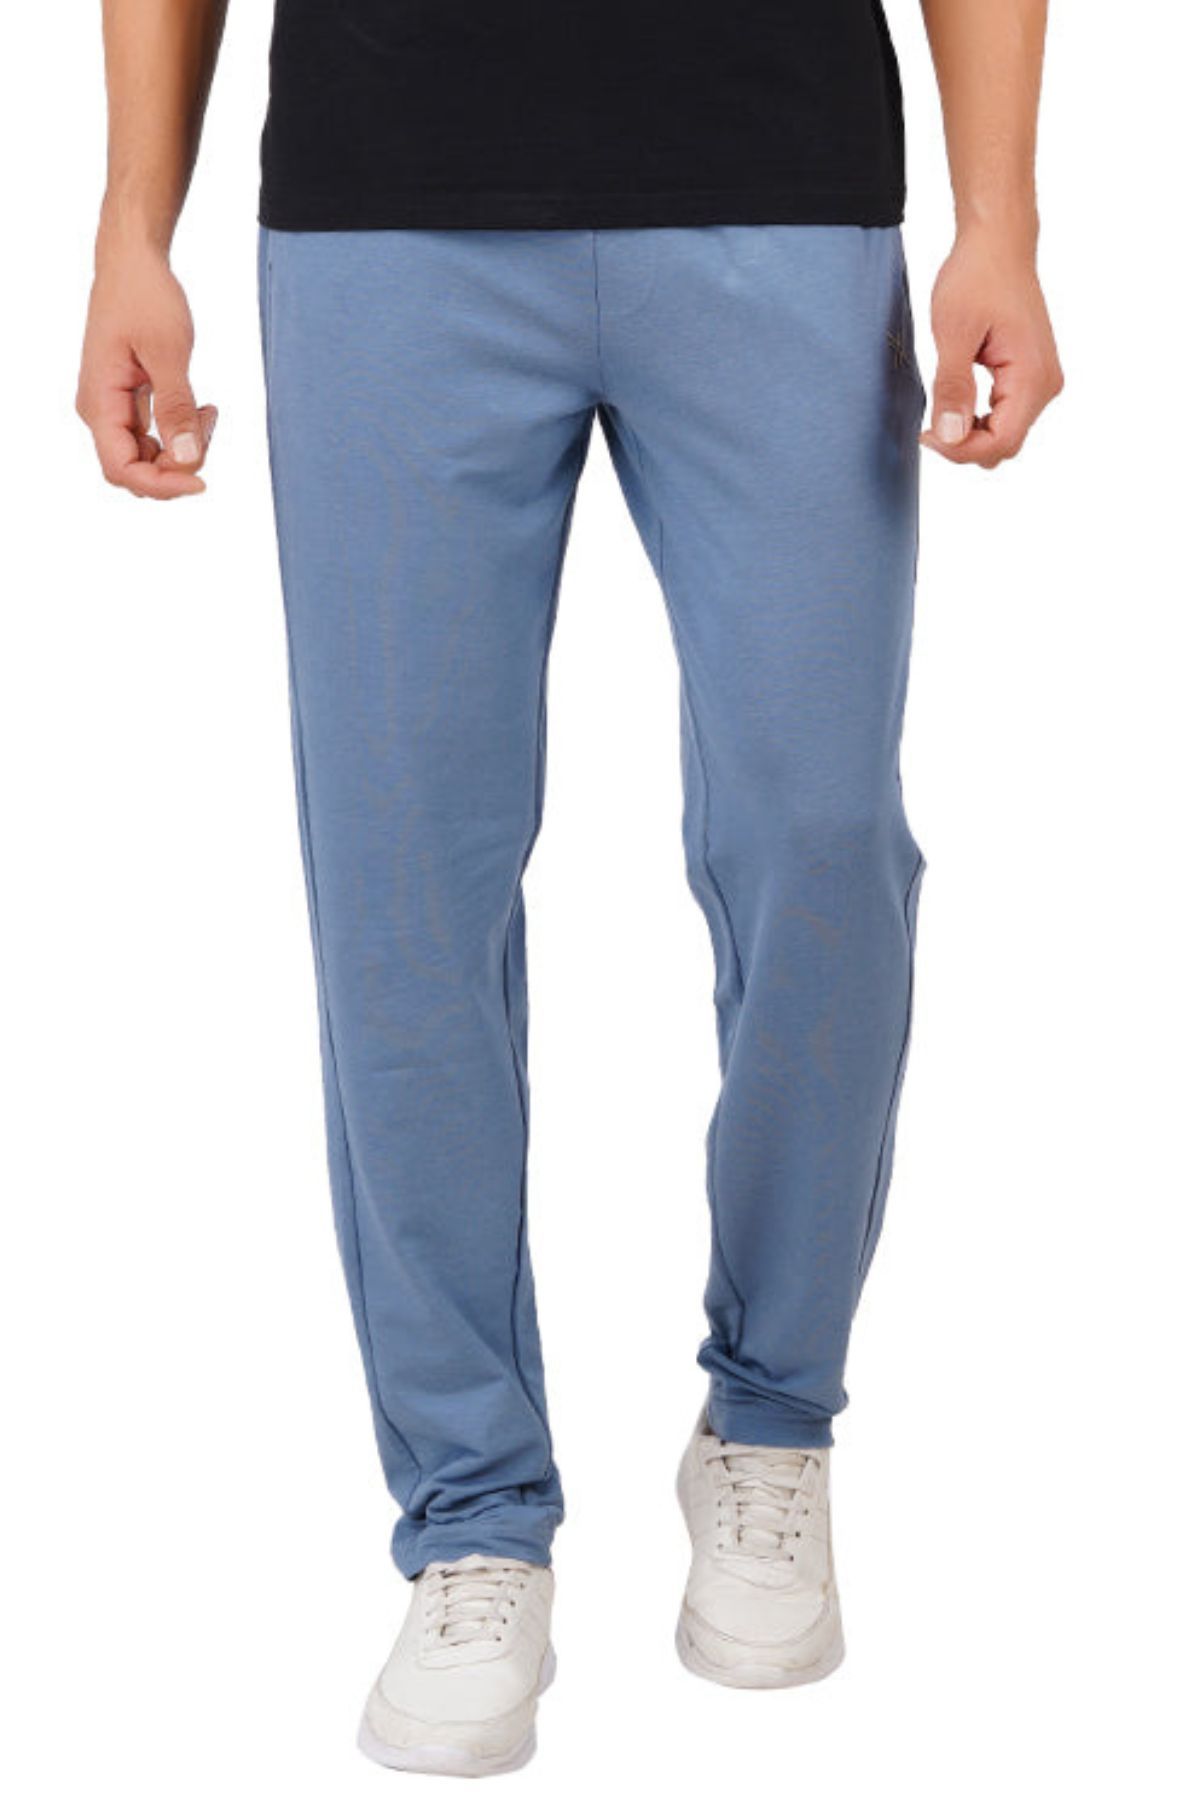 Champion Elite light blue track pants | Clothes design, Outfit inspo,  Outfits